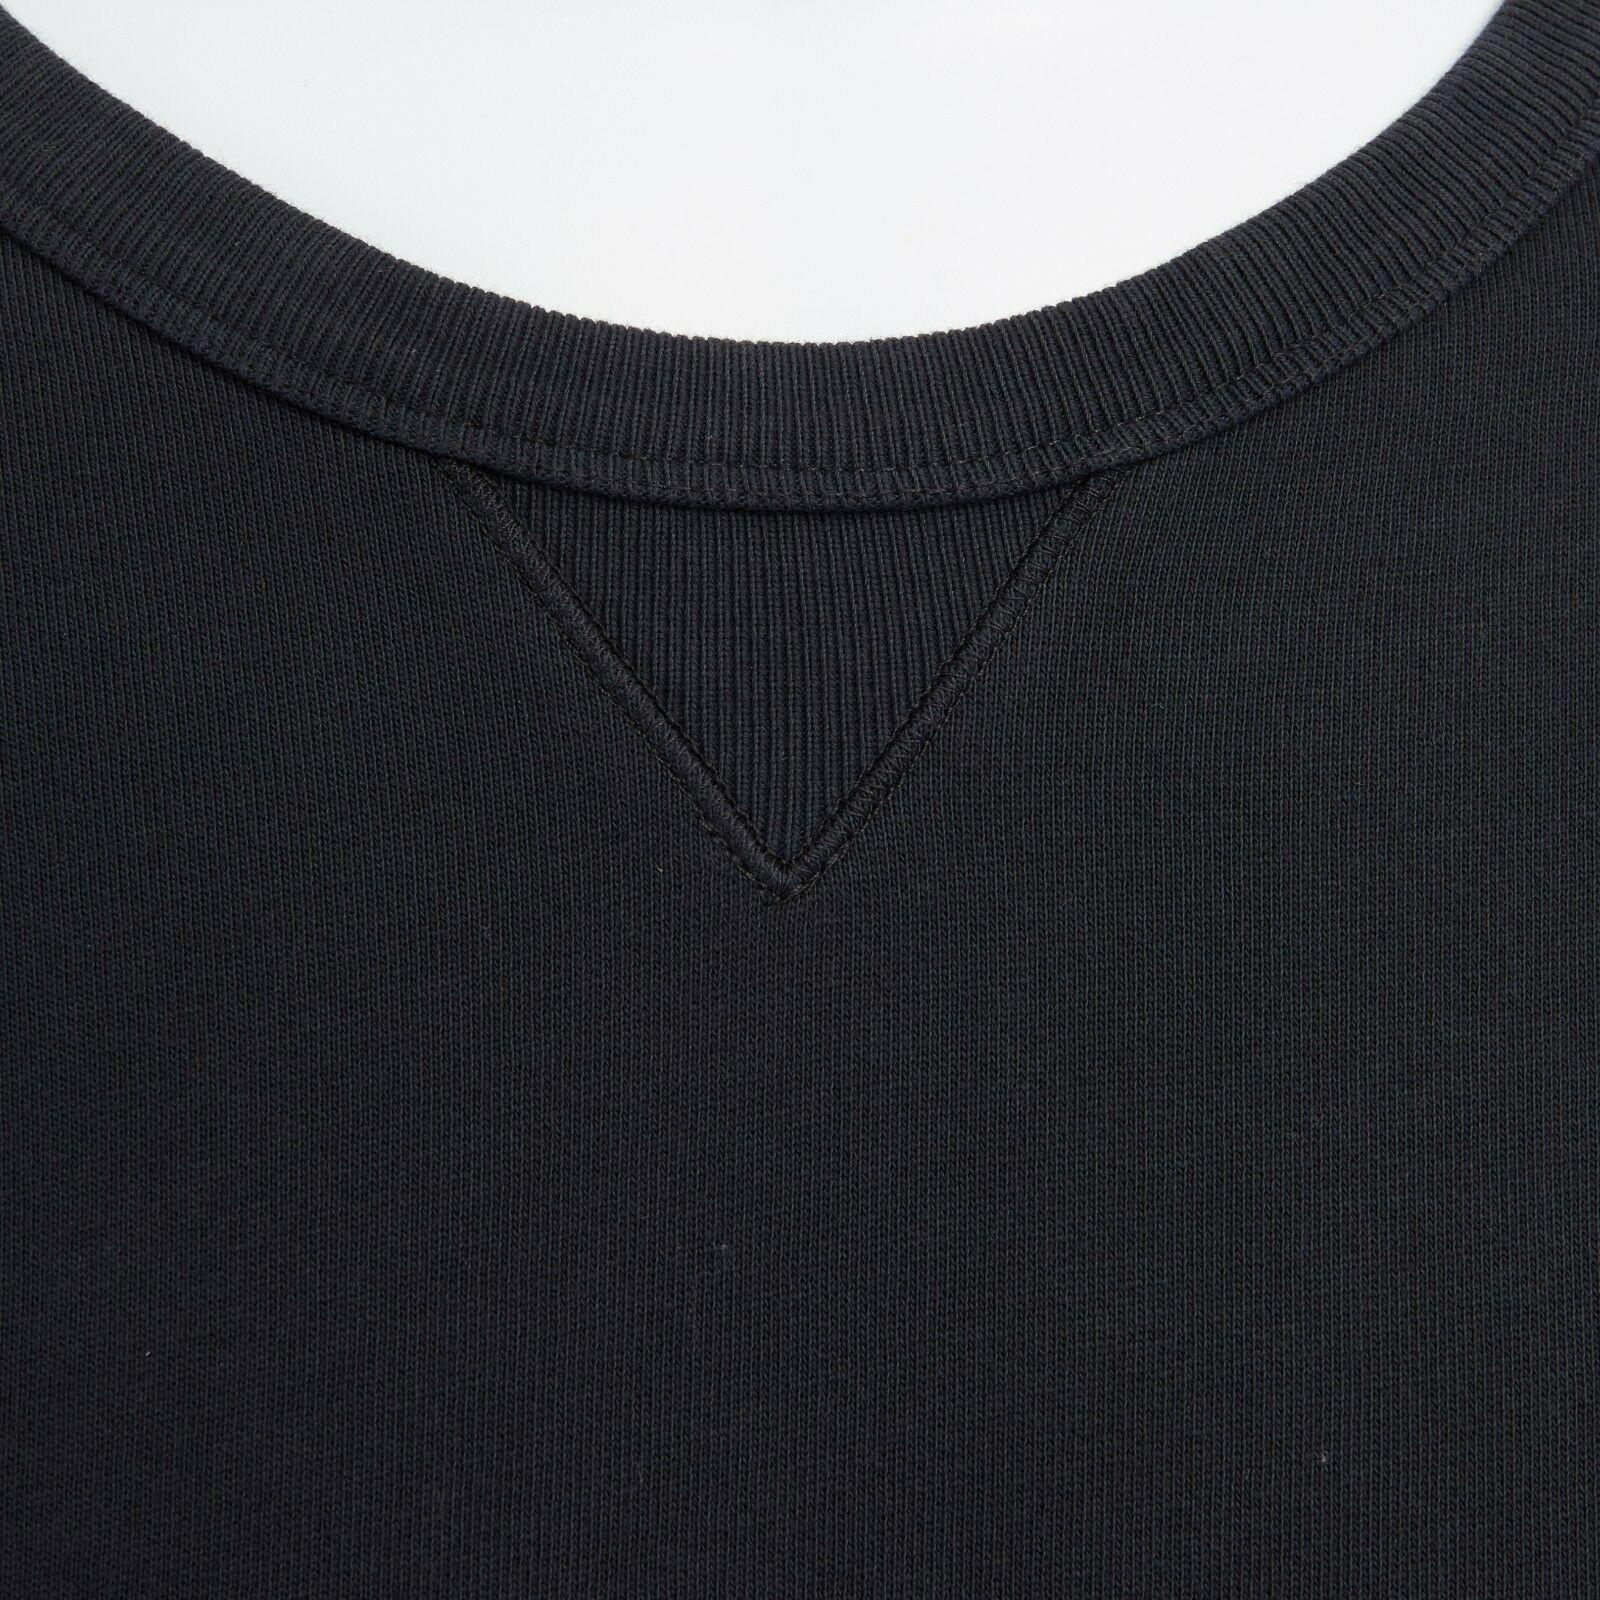 DRIES VAN NOTEN  black cotton zip back quilted lining sweater pullover top L 1